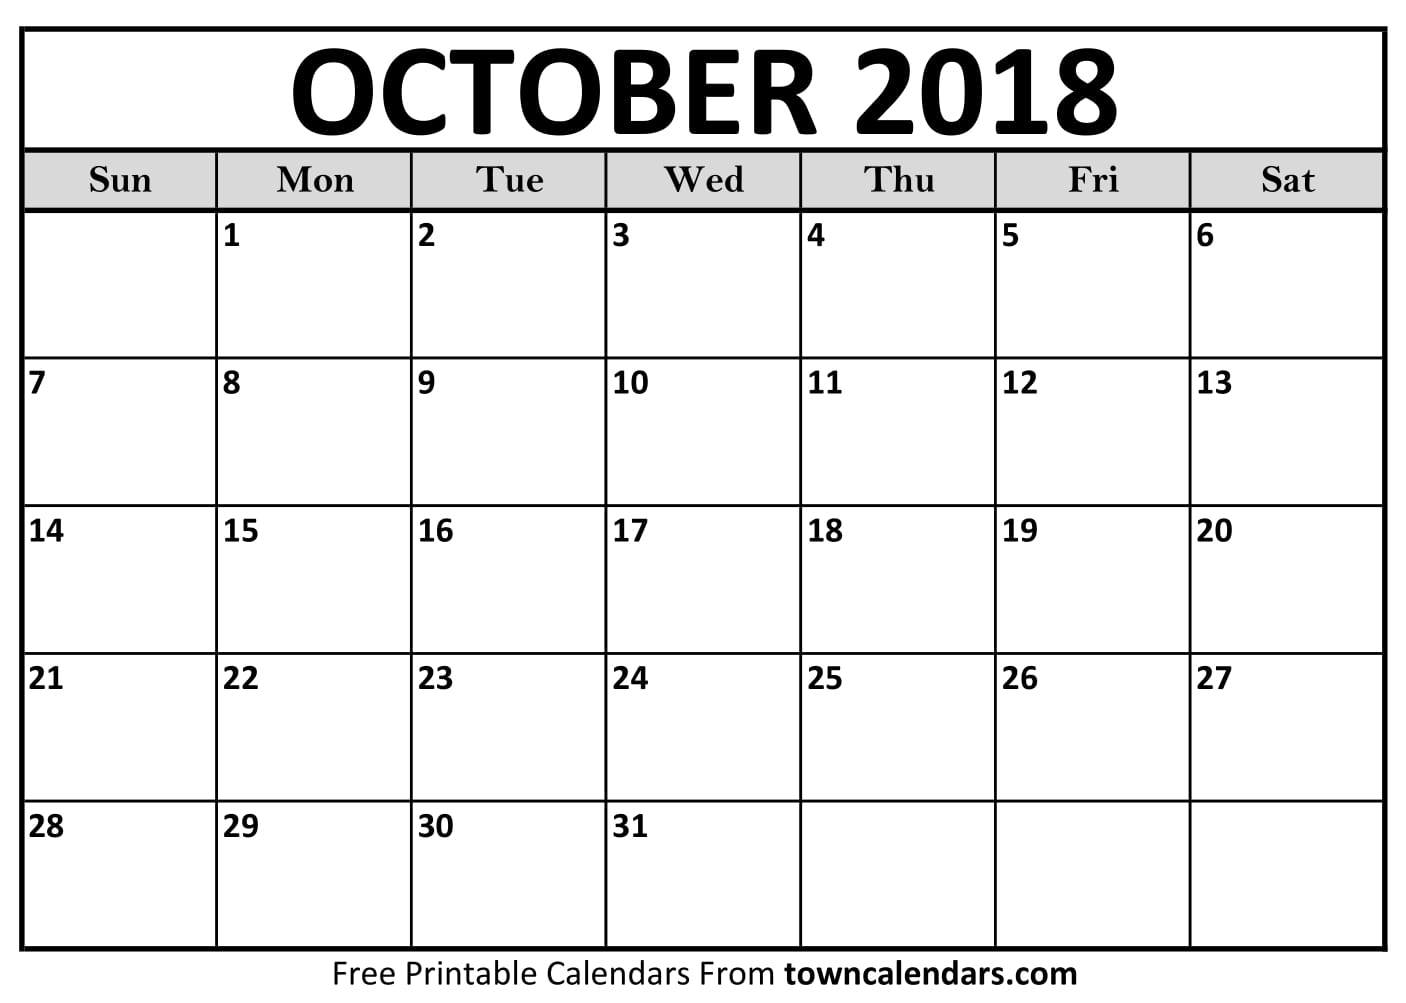 Printable October 2018 Calendar Towncalendars